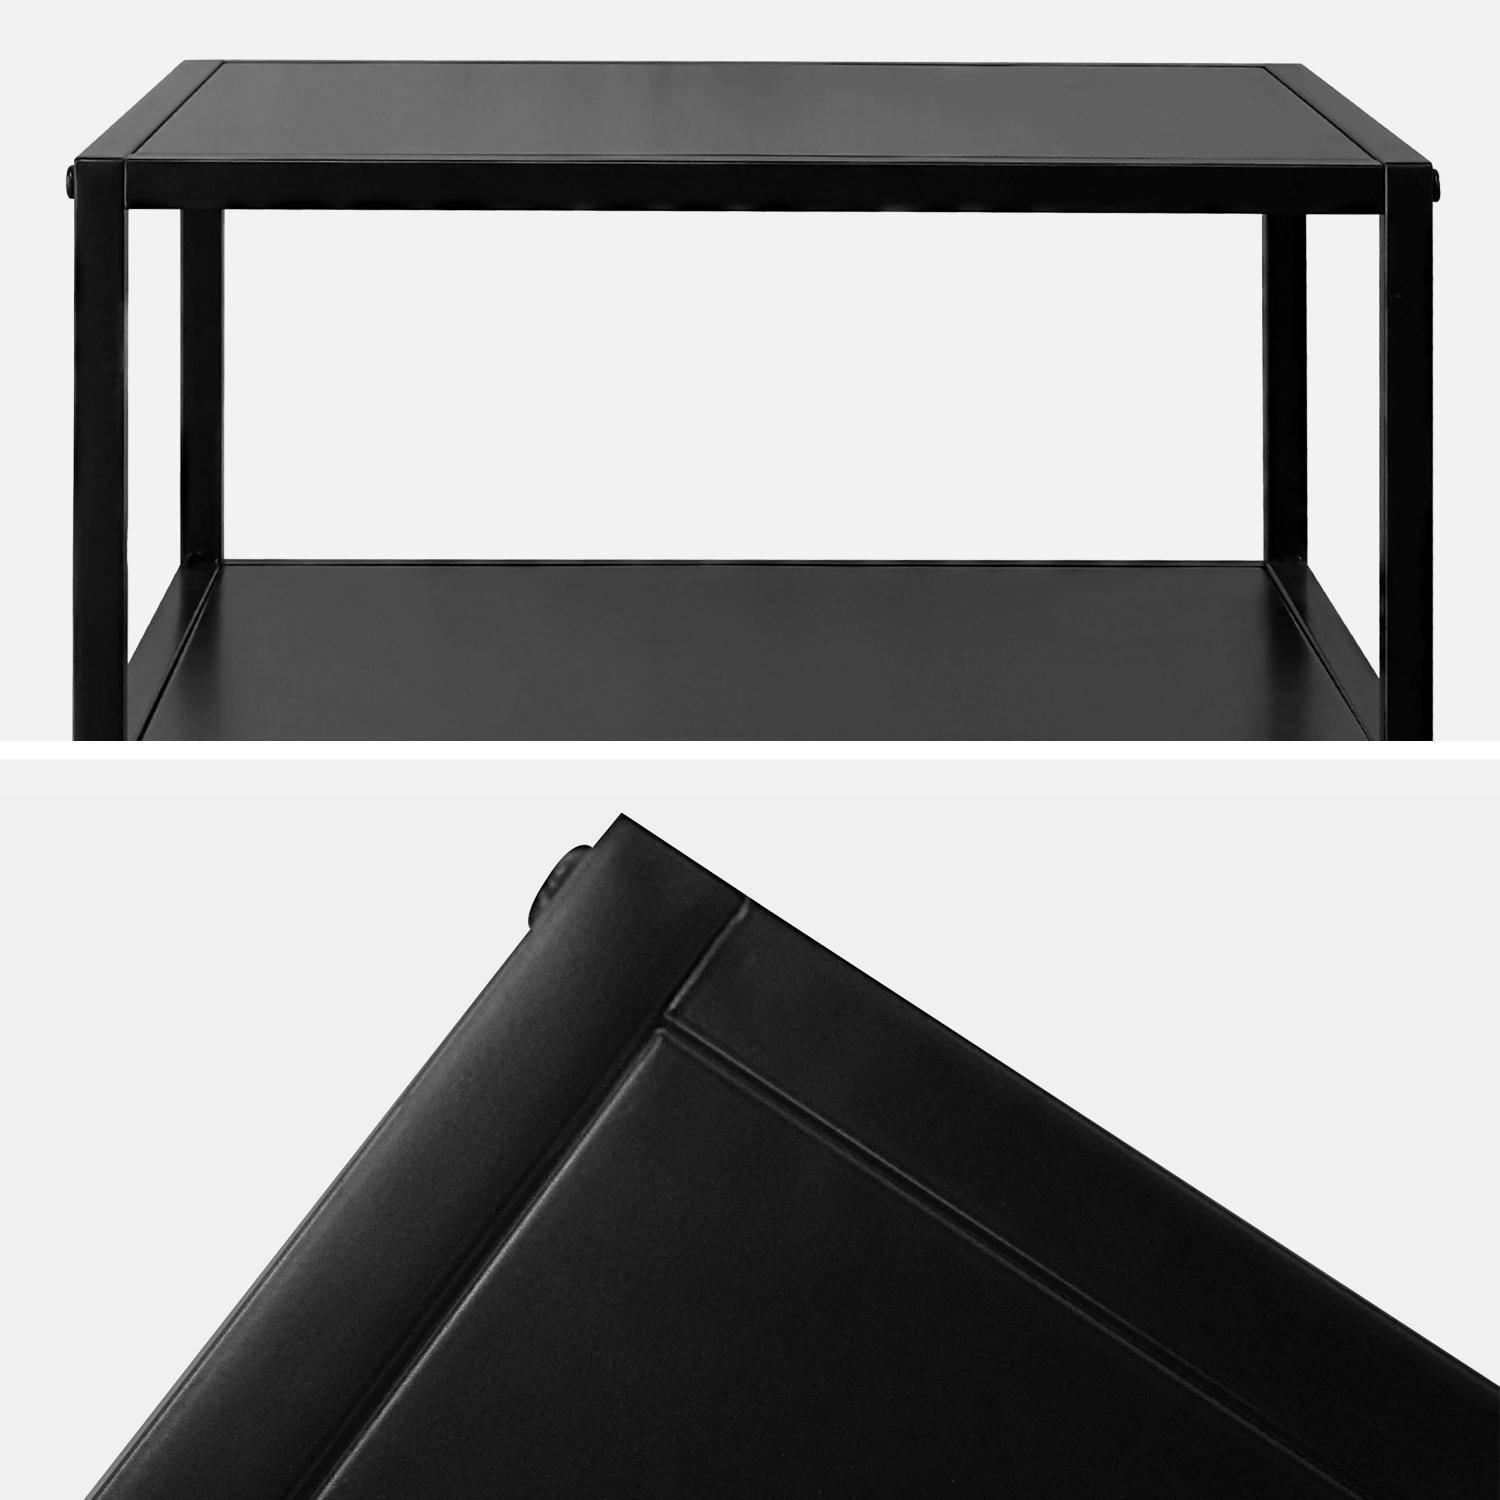 Set of 2 black metal bedside tables, 1 shelf, INDUSTRIAL L43xW40xH52cm,sweeek,Photo7